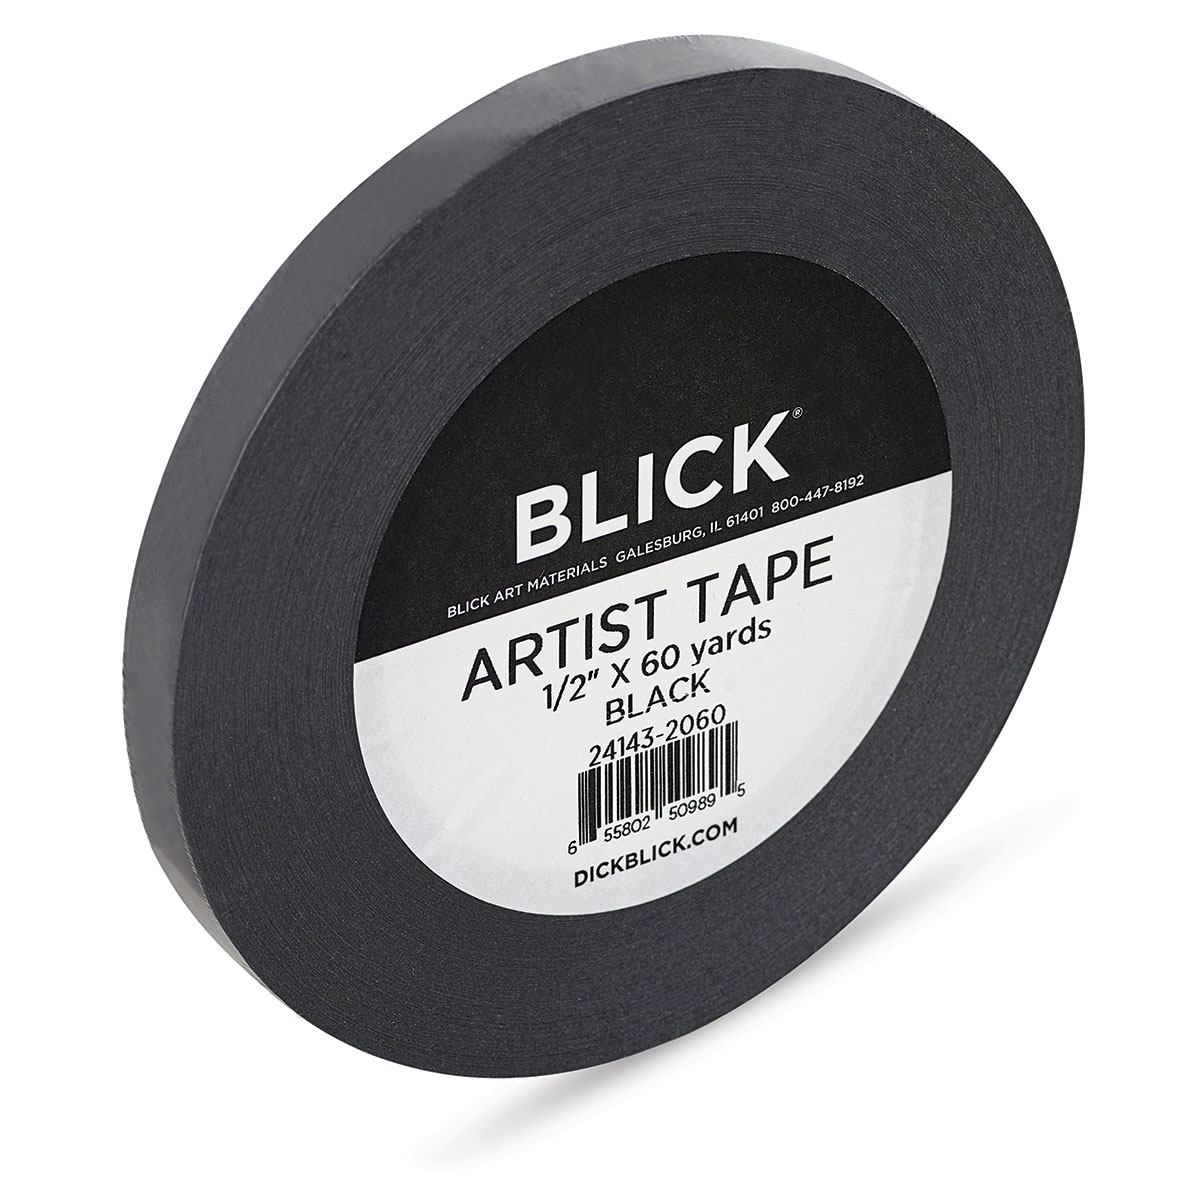 Artist Tape White 1/2